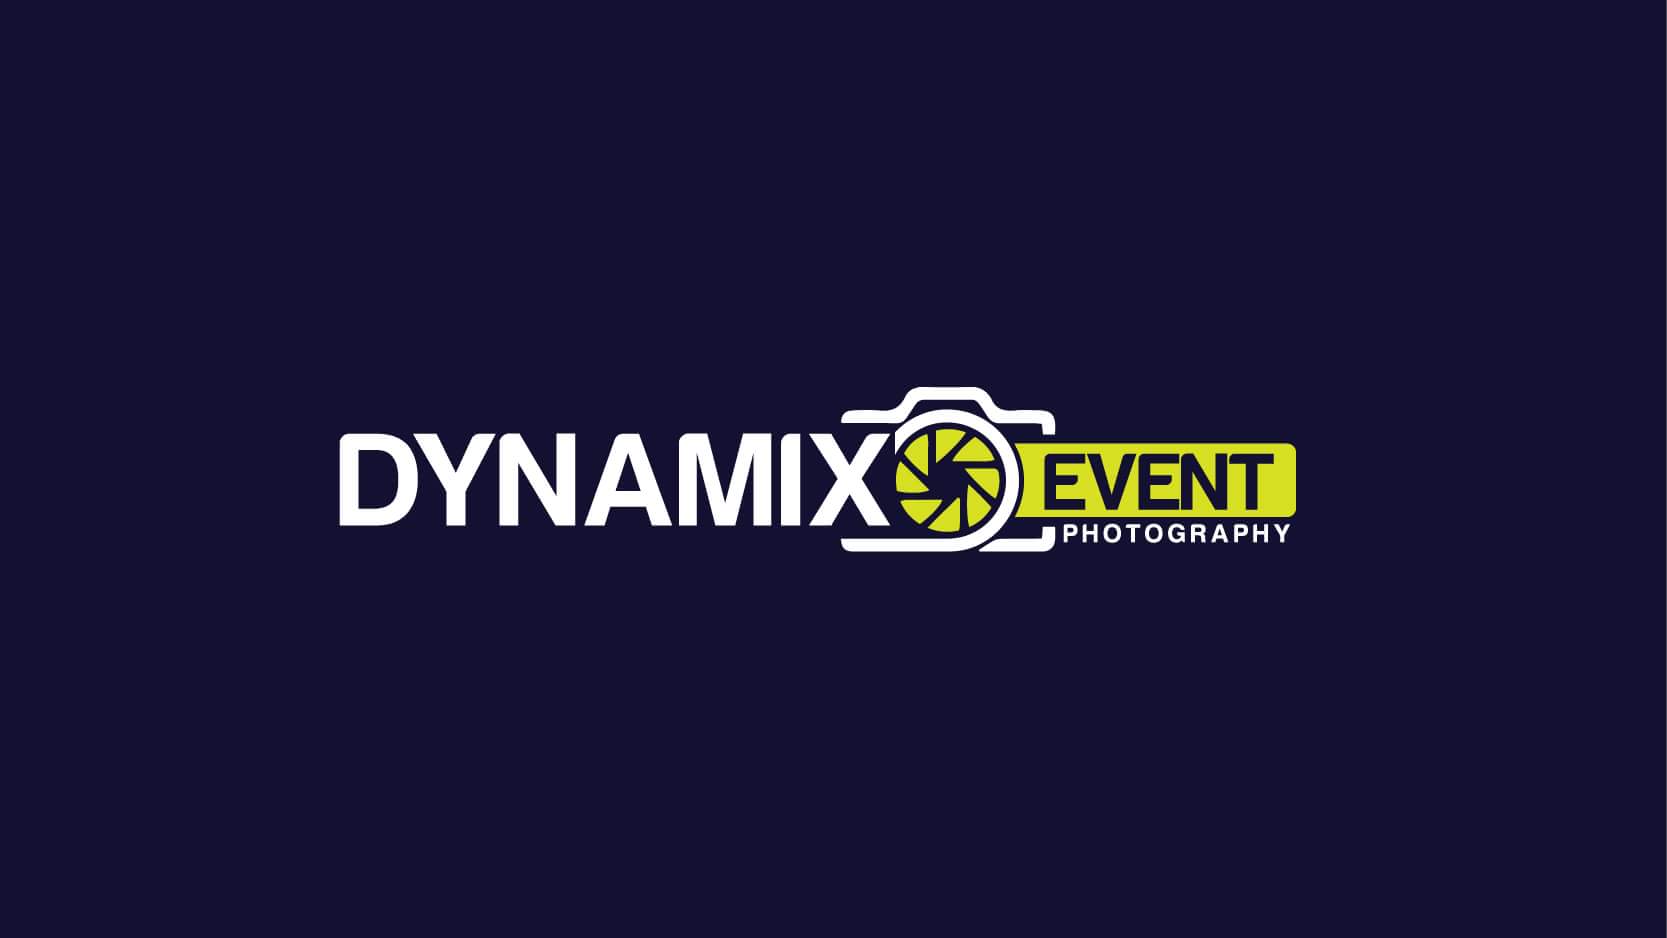 Dynamix Event Photography